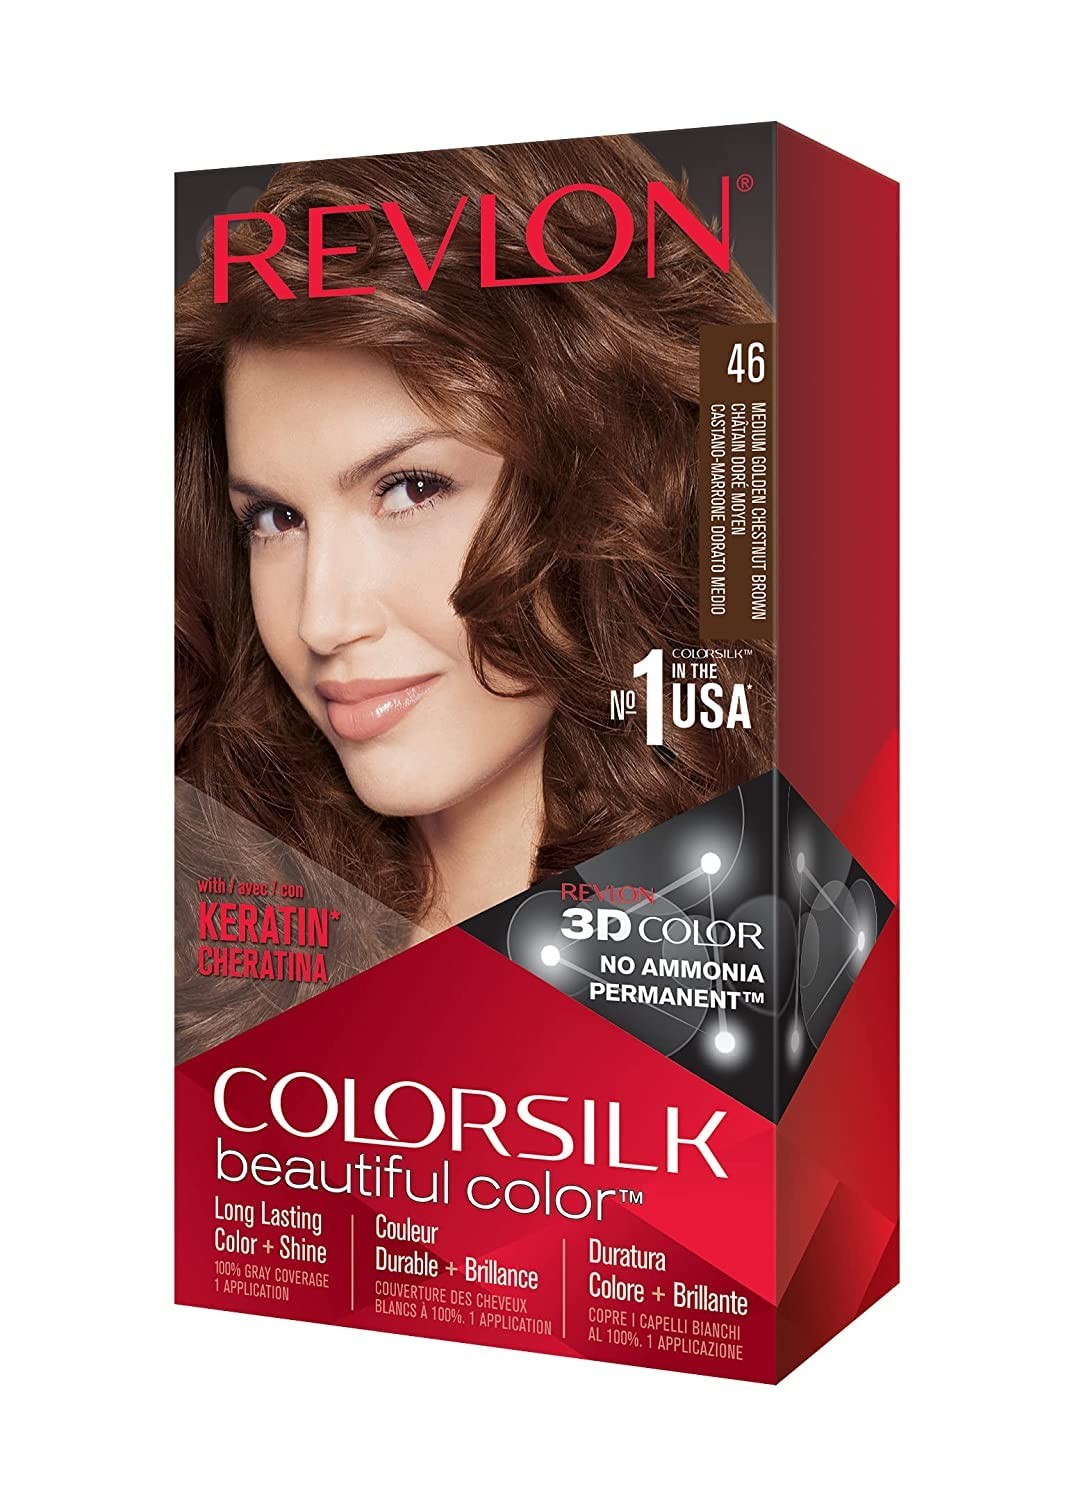 Revlon Colorsilk Beautiful Color, Medium Golden Chestnut Brown [46]